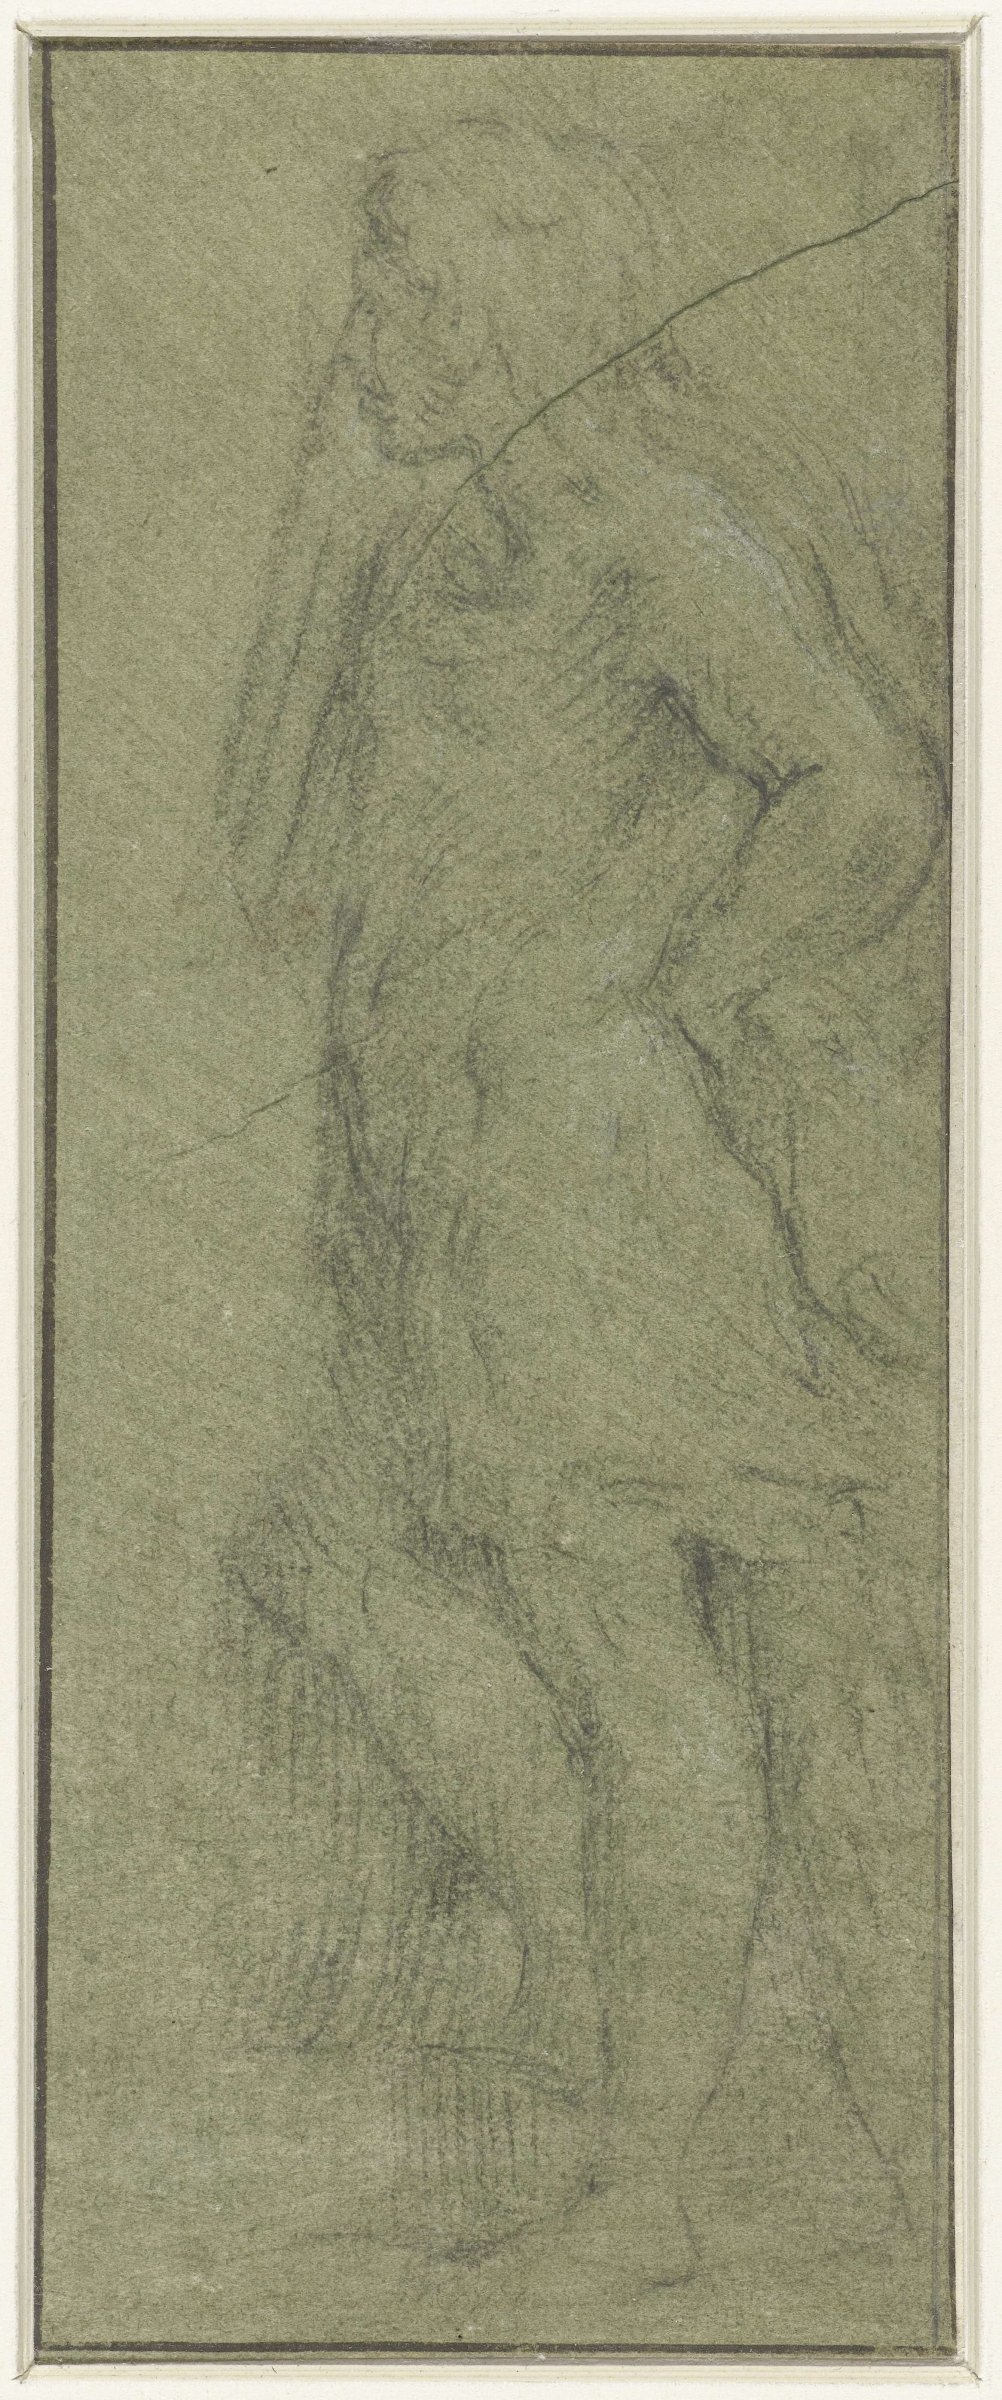 Standing figure, in profile to the left, Schiavone, 1510 - 1563